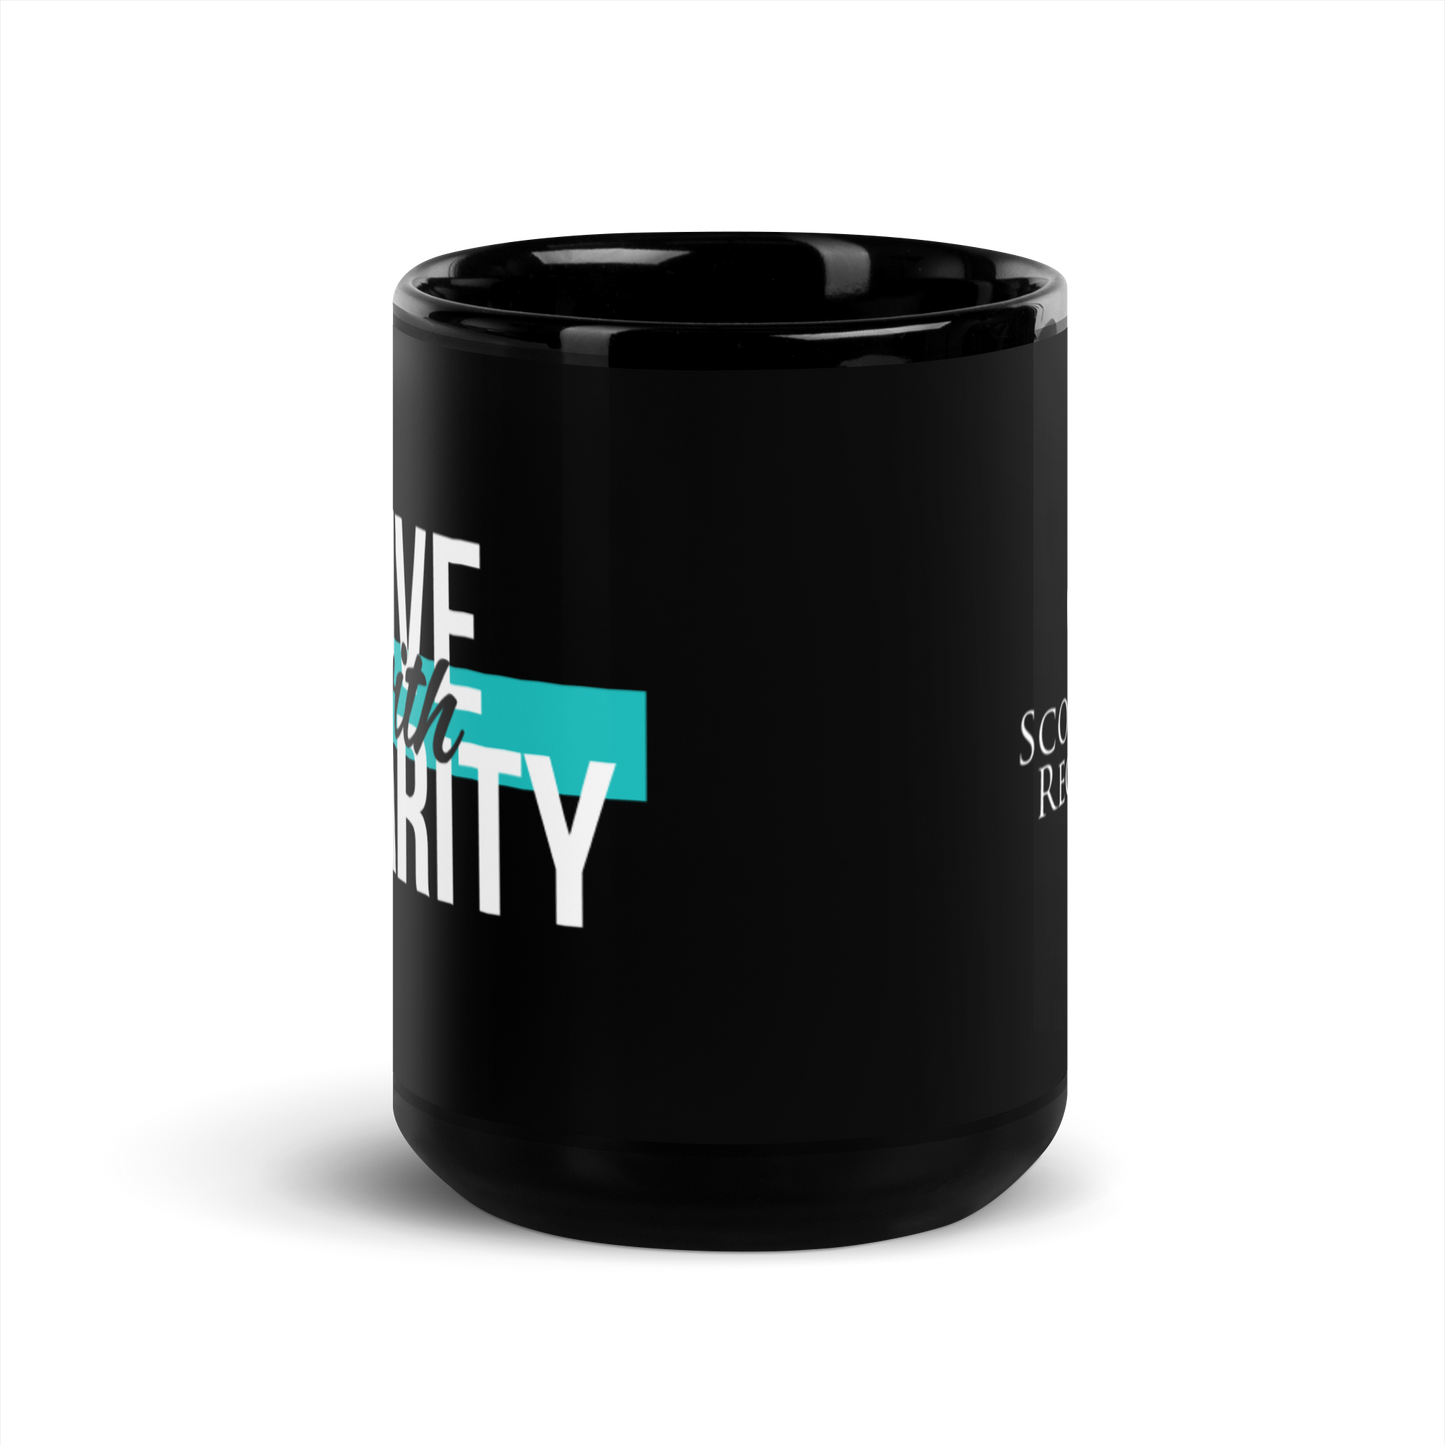 Live With Clarity Glossy Mug - Black